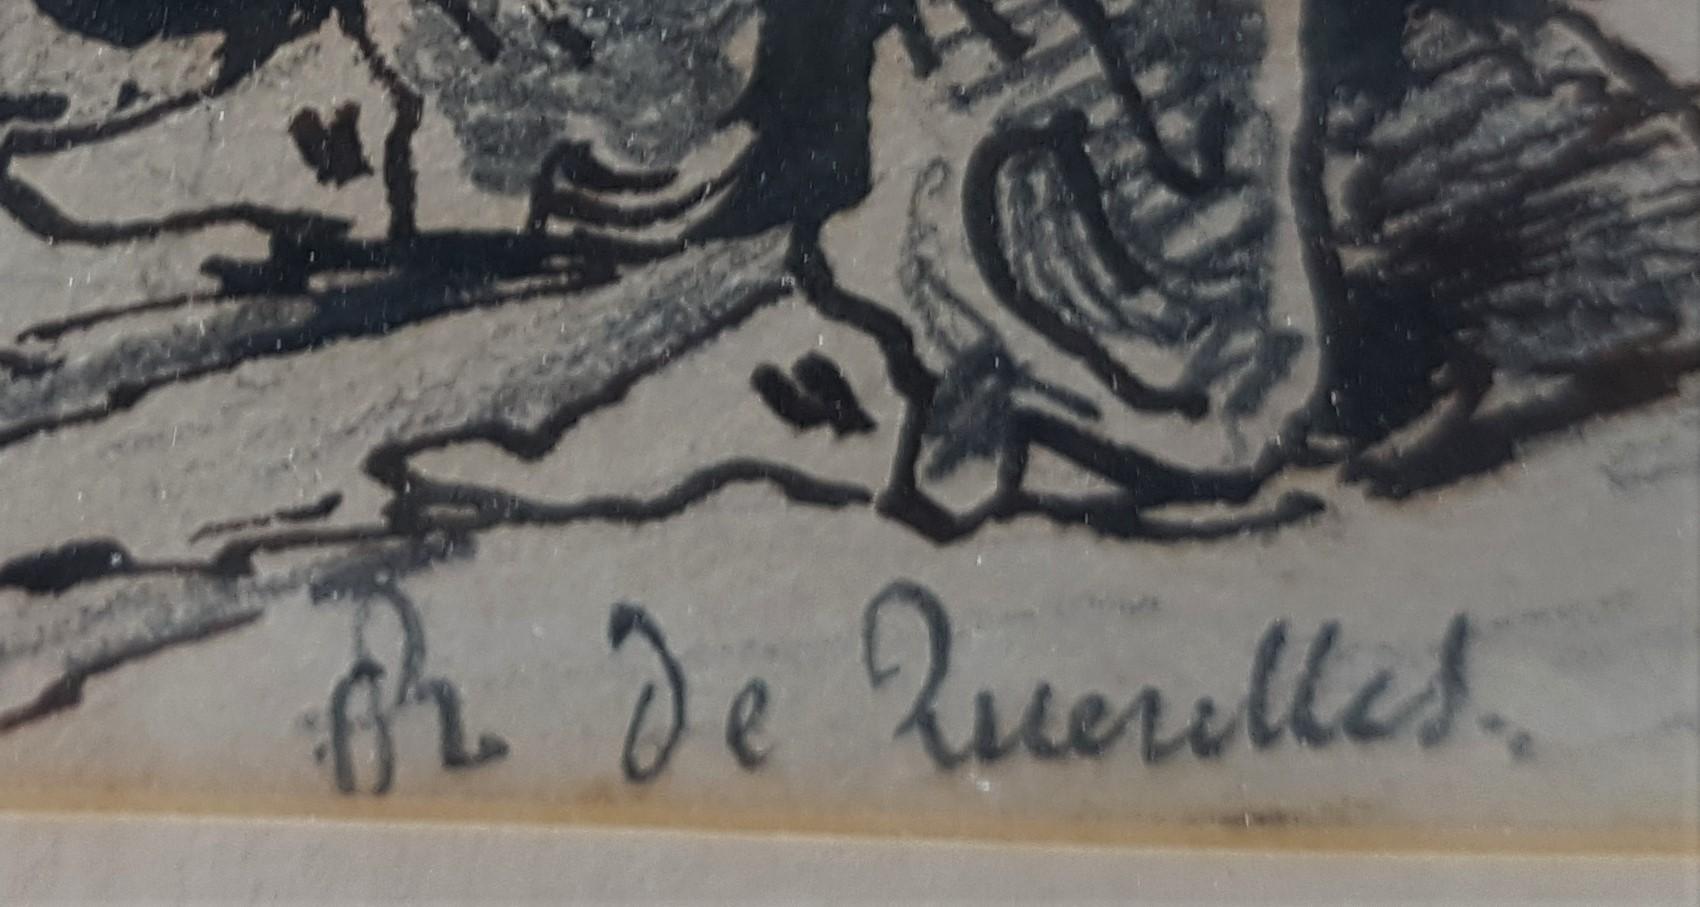 Richard de QUERELLES Neuviller (Bas-Rhin), 1808 - Paris, 1846
Drawing Pen and ink 17.5 x 19 cm (28 x 37.5 cm with the frame) Signed 